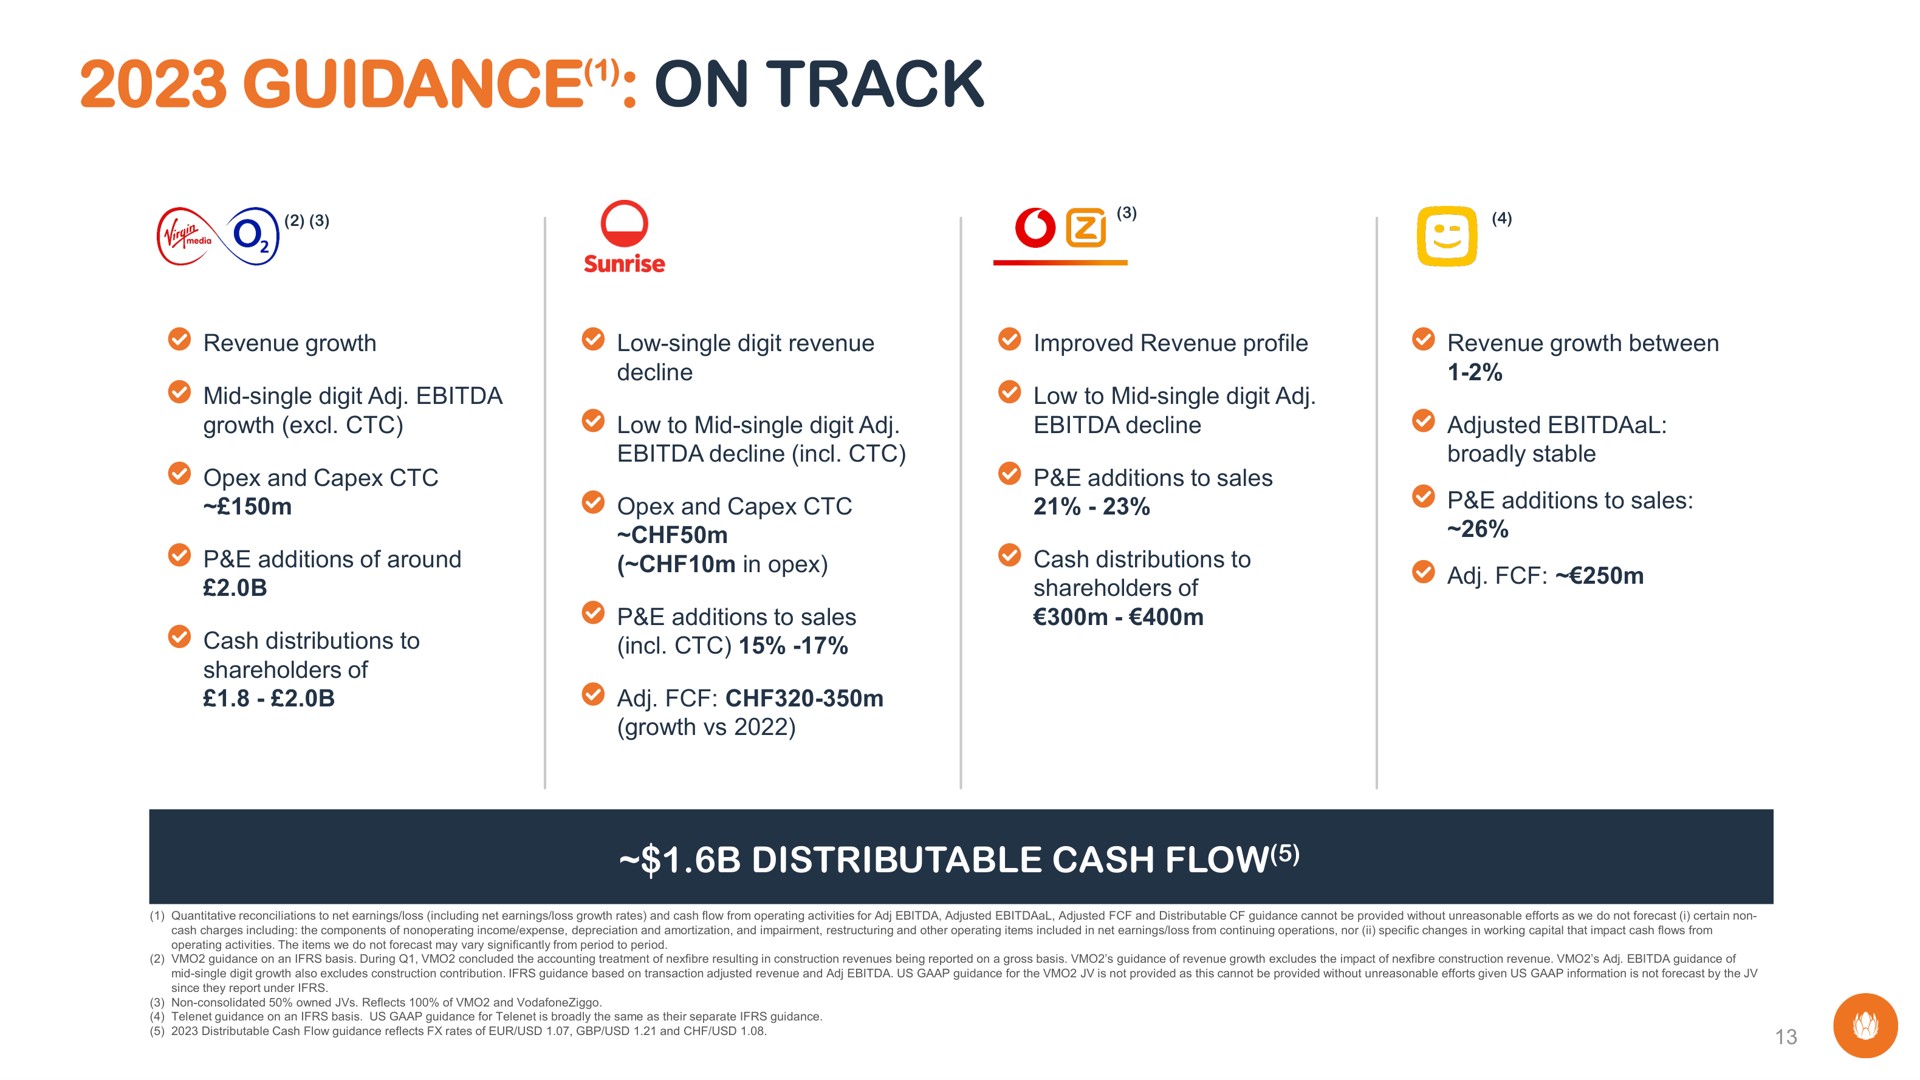 guidance on track distributable cash flow | Liberty Global